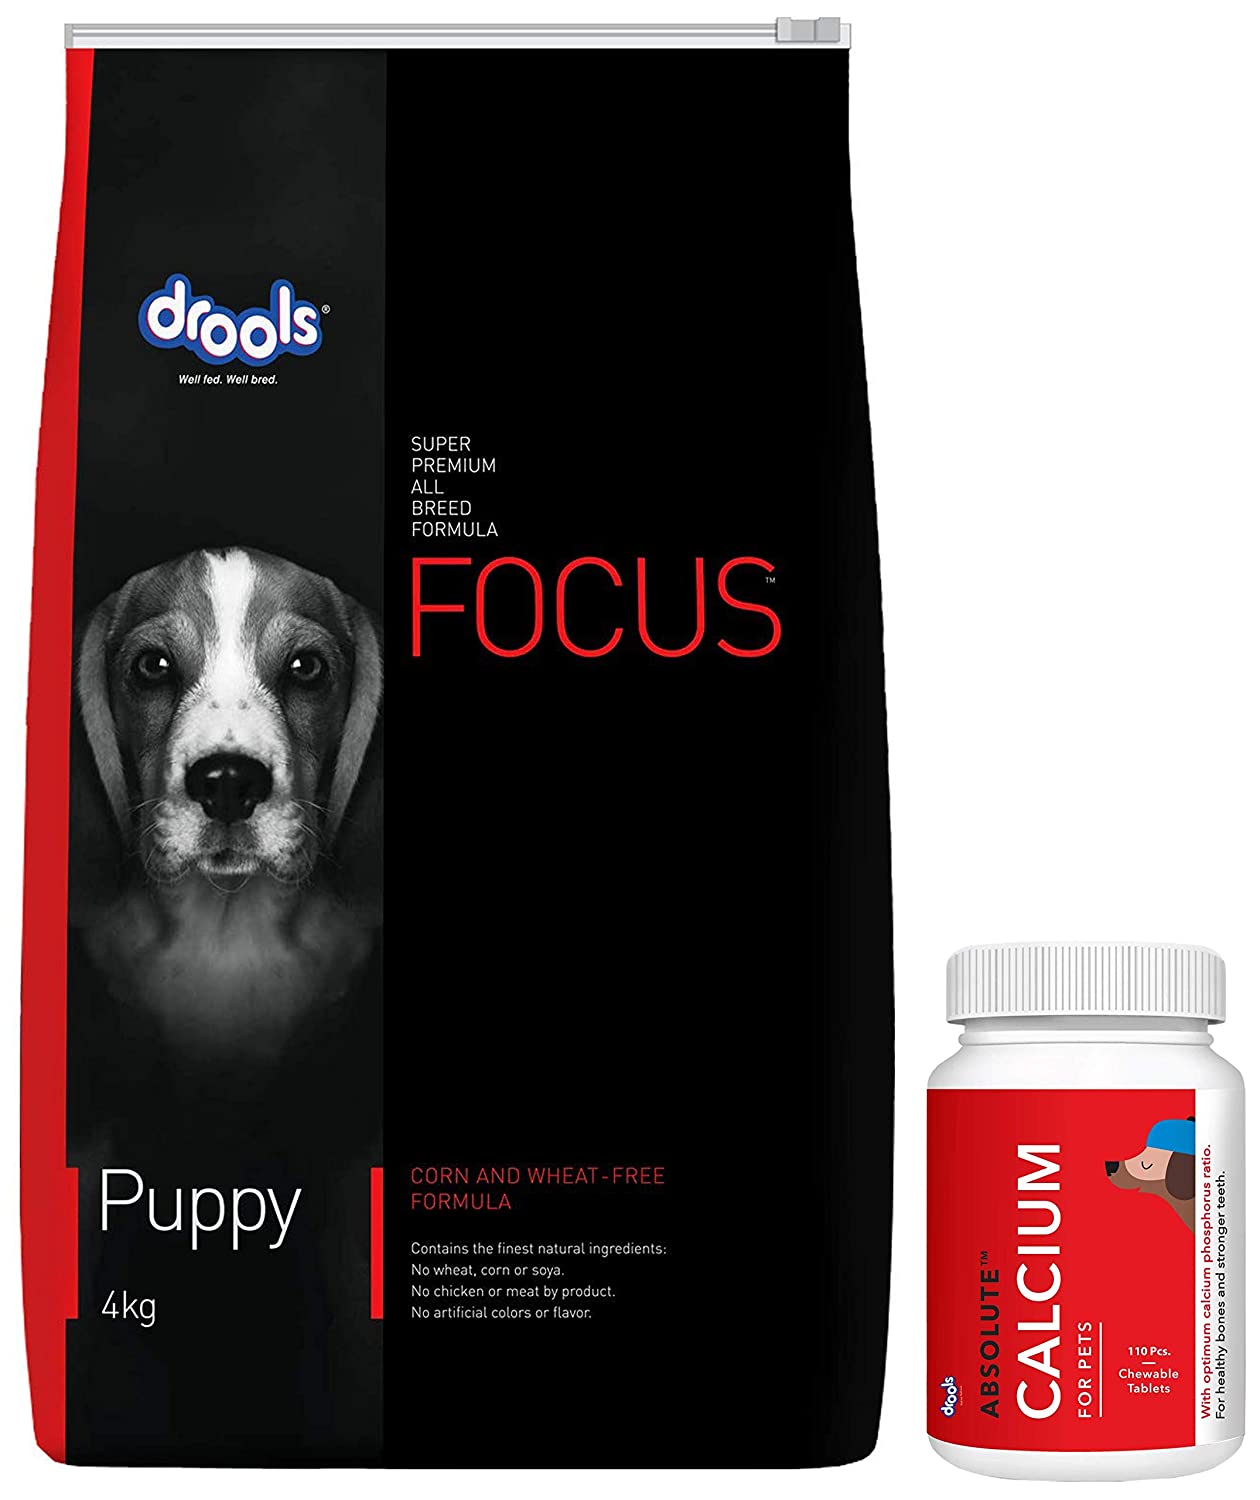 Drools Focus Puppy Super Premium Dog Food, 4Kg & Absolute Calcium Tablet- Dog Supplement, 110 Pieces